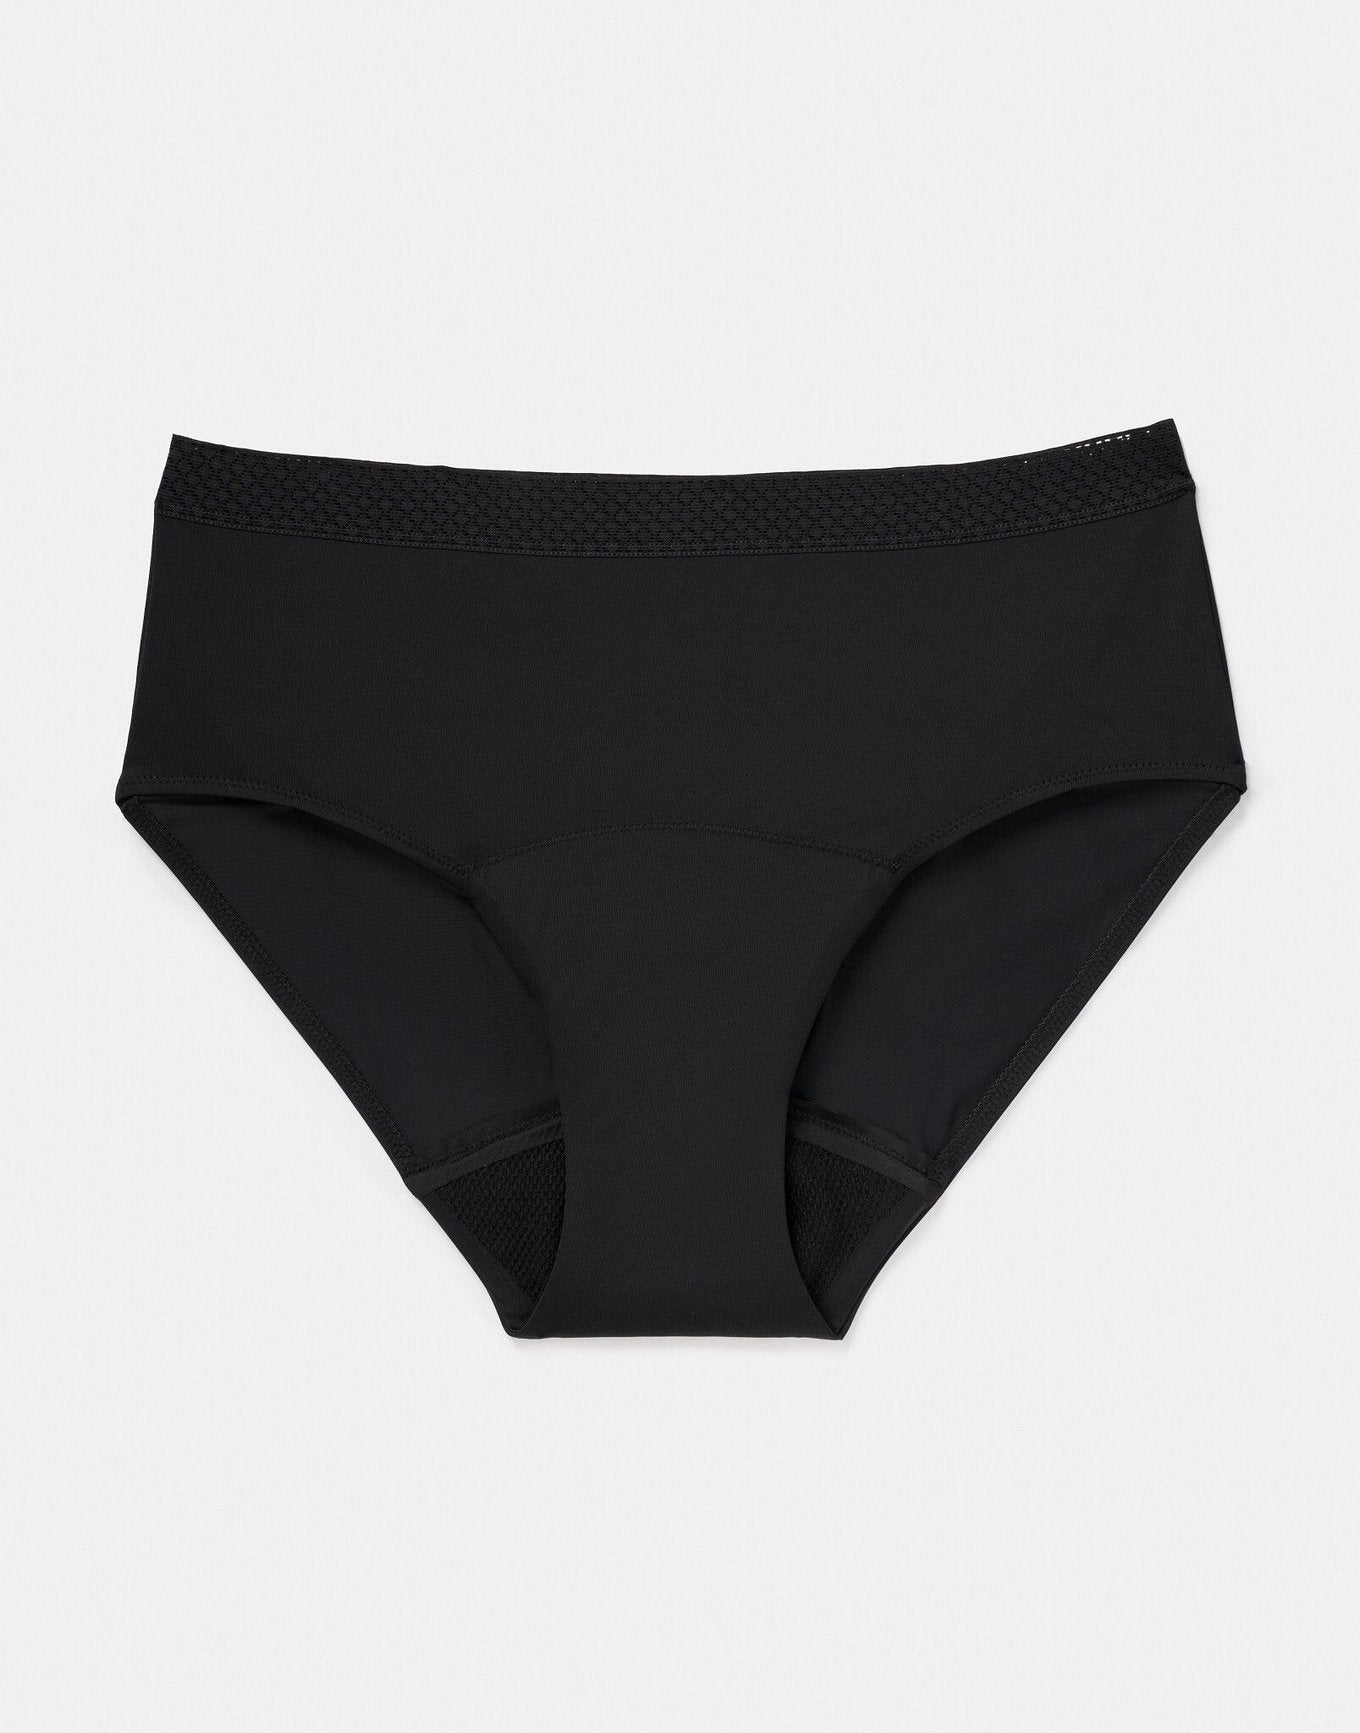 Joyja Madison period-proof panty in color Jet Black and shape midi brief